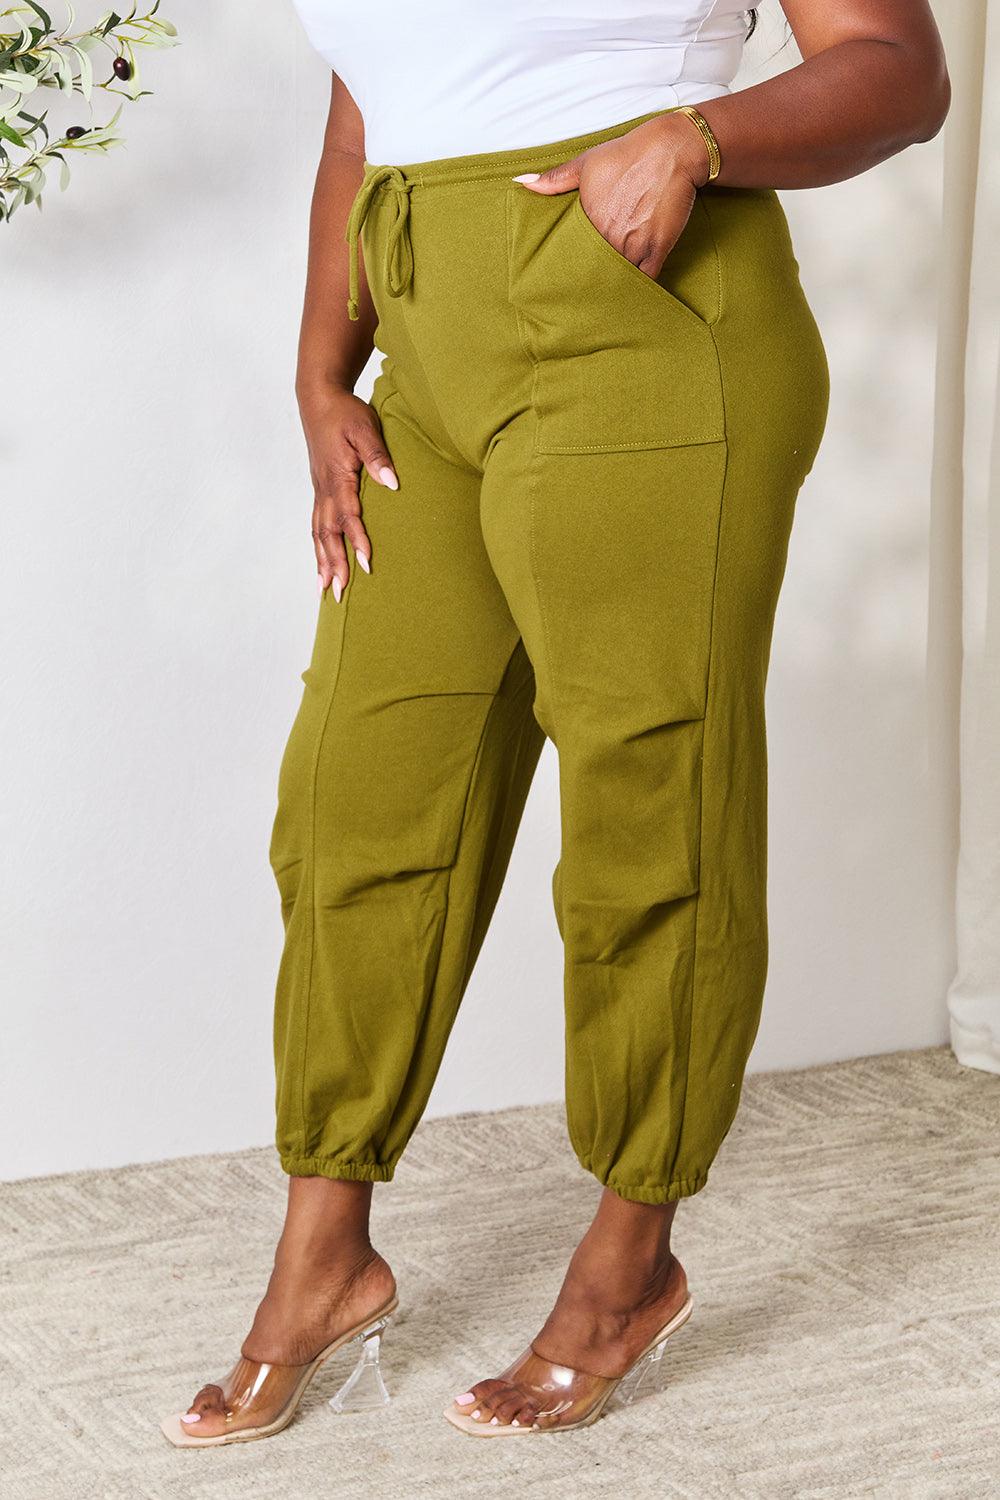 Bona Fide Fashion - Full Size Drawstring Sweatpants with pockets - Women Fashion - Bona Fide Fashion